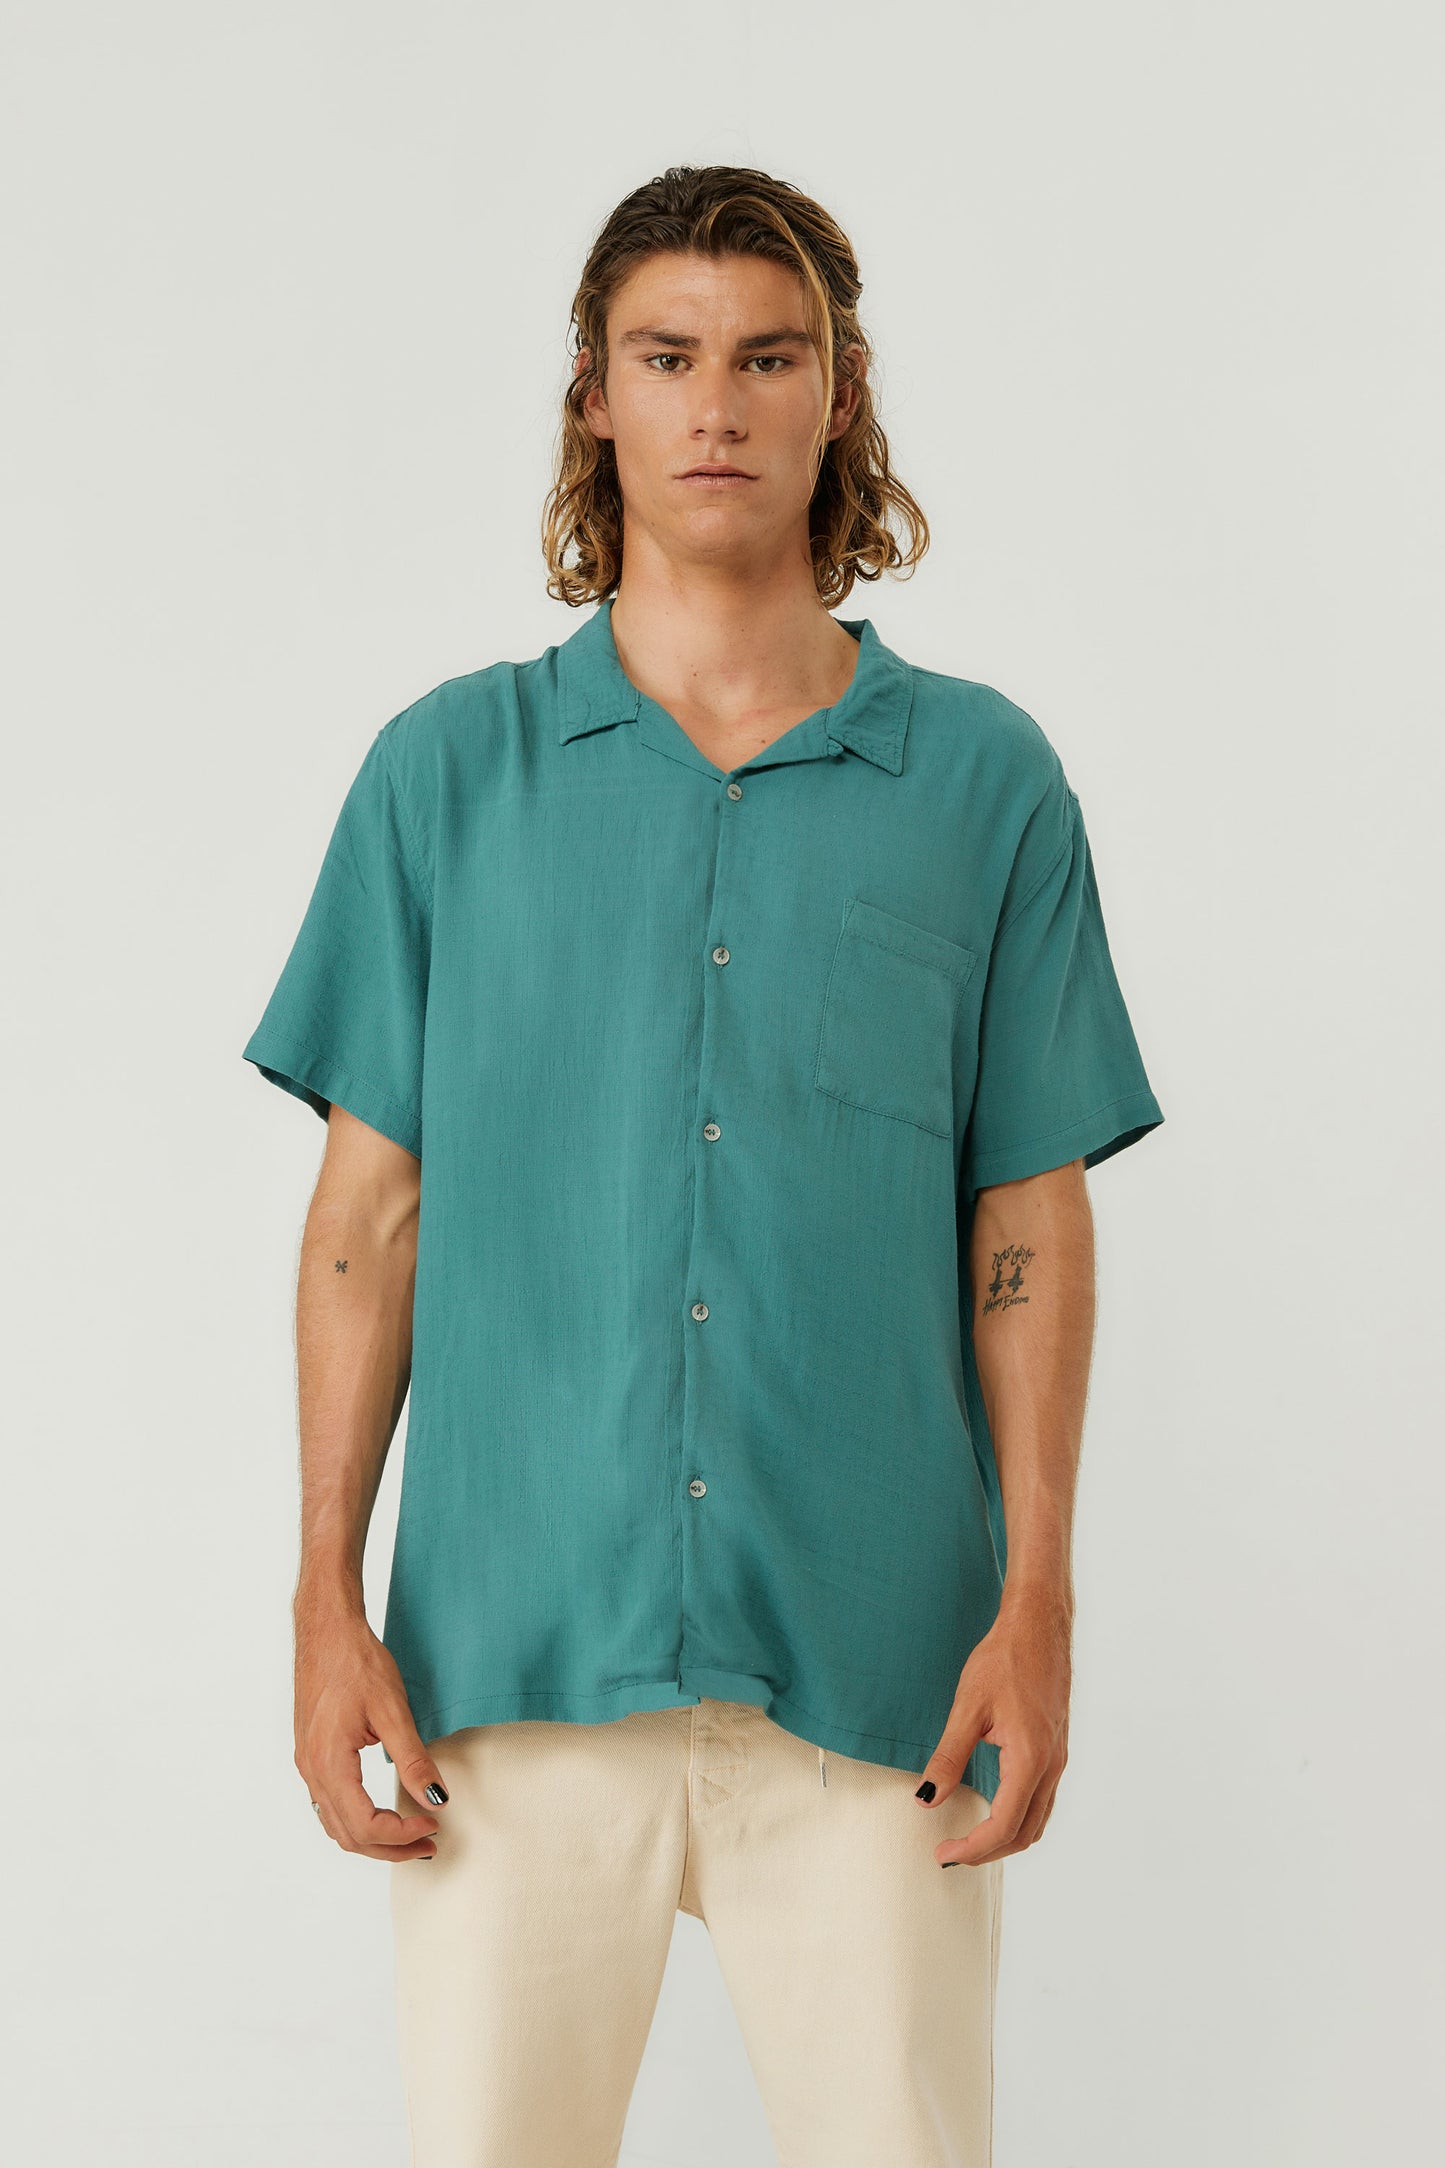 Pukas-Surf-Shop-Pukas-Clothing-Texture-shirt-men